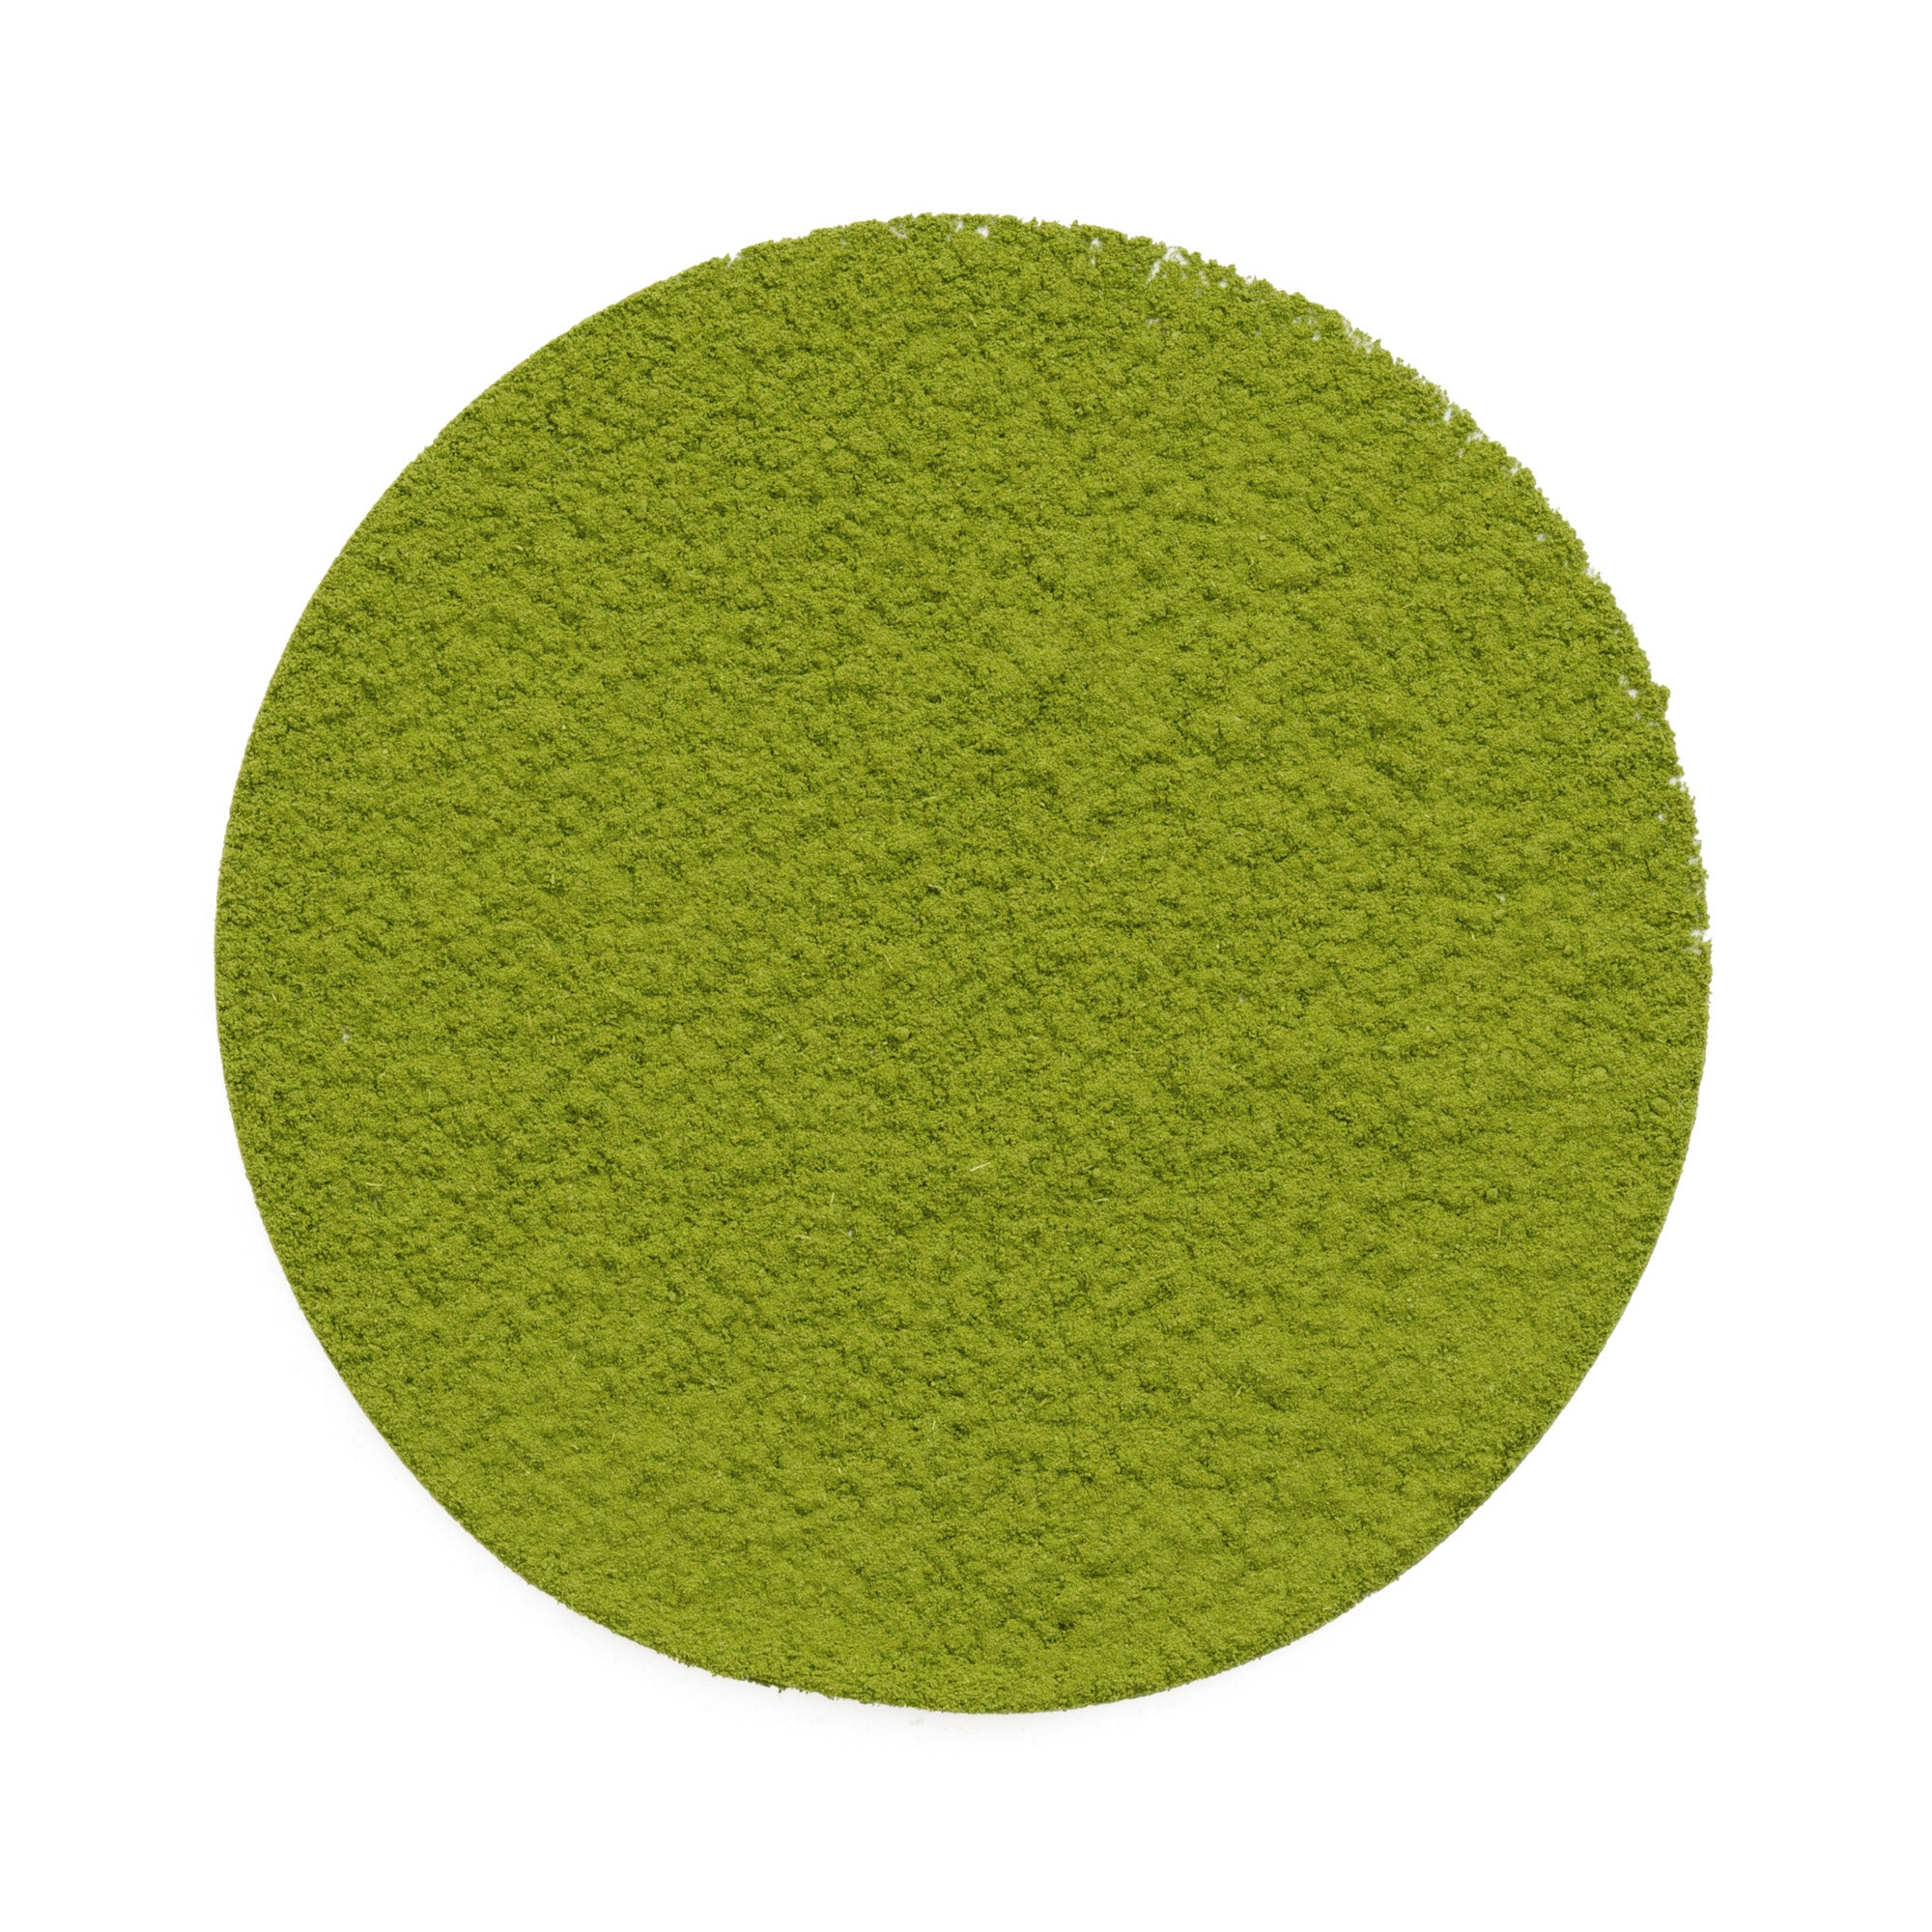 Organic Bulk Ceremonial Grade UJI Matcha Green Tea Powder, Antioxidant Rich, Premium Quality, Single Origin | Heavenly Tea Leaves